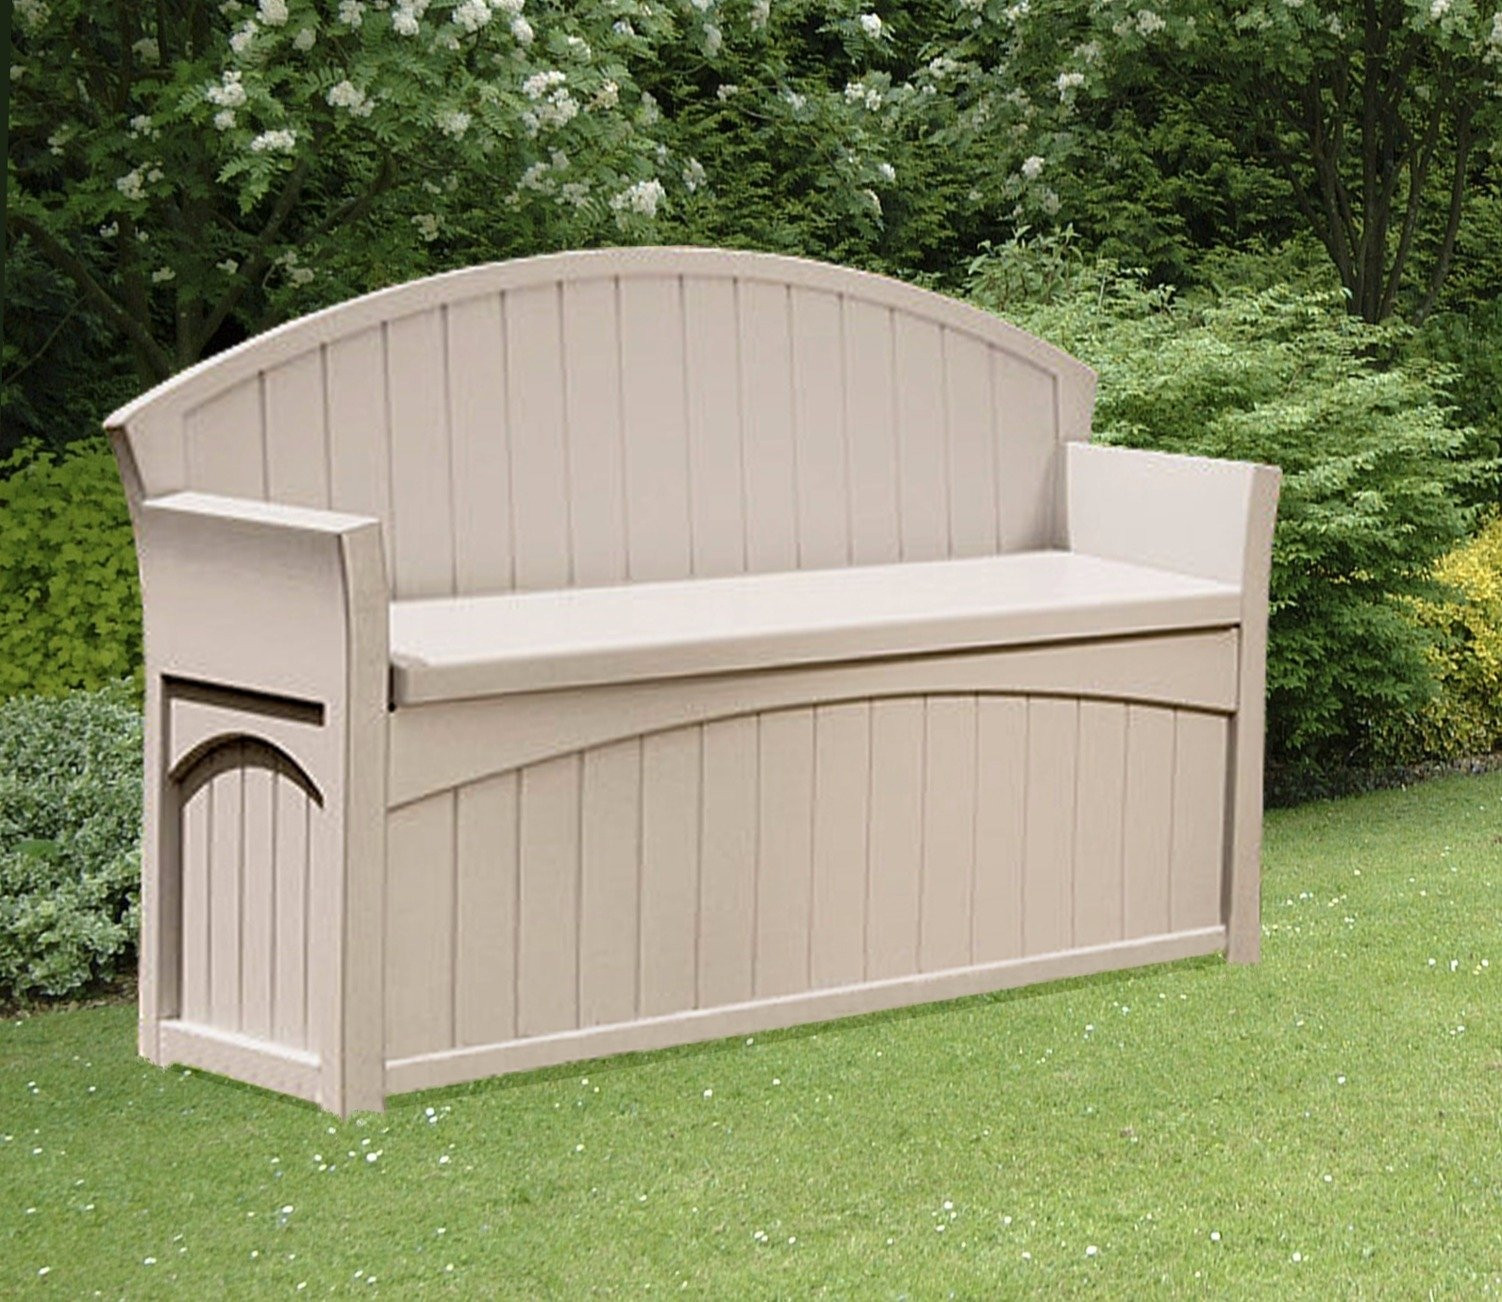 Suncast Outdoor Storage Bench
 Suncast Patio Garden Outdoor Bench with 50 Gallon Storage